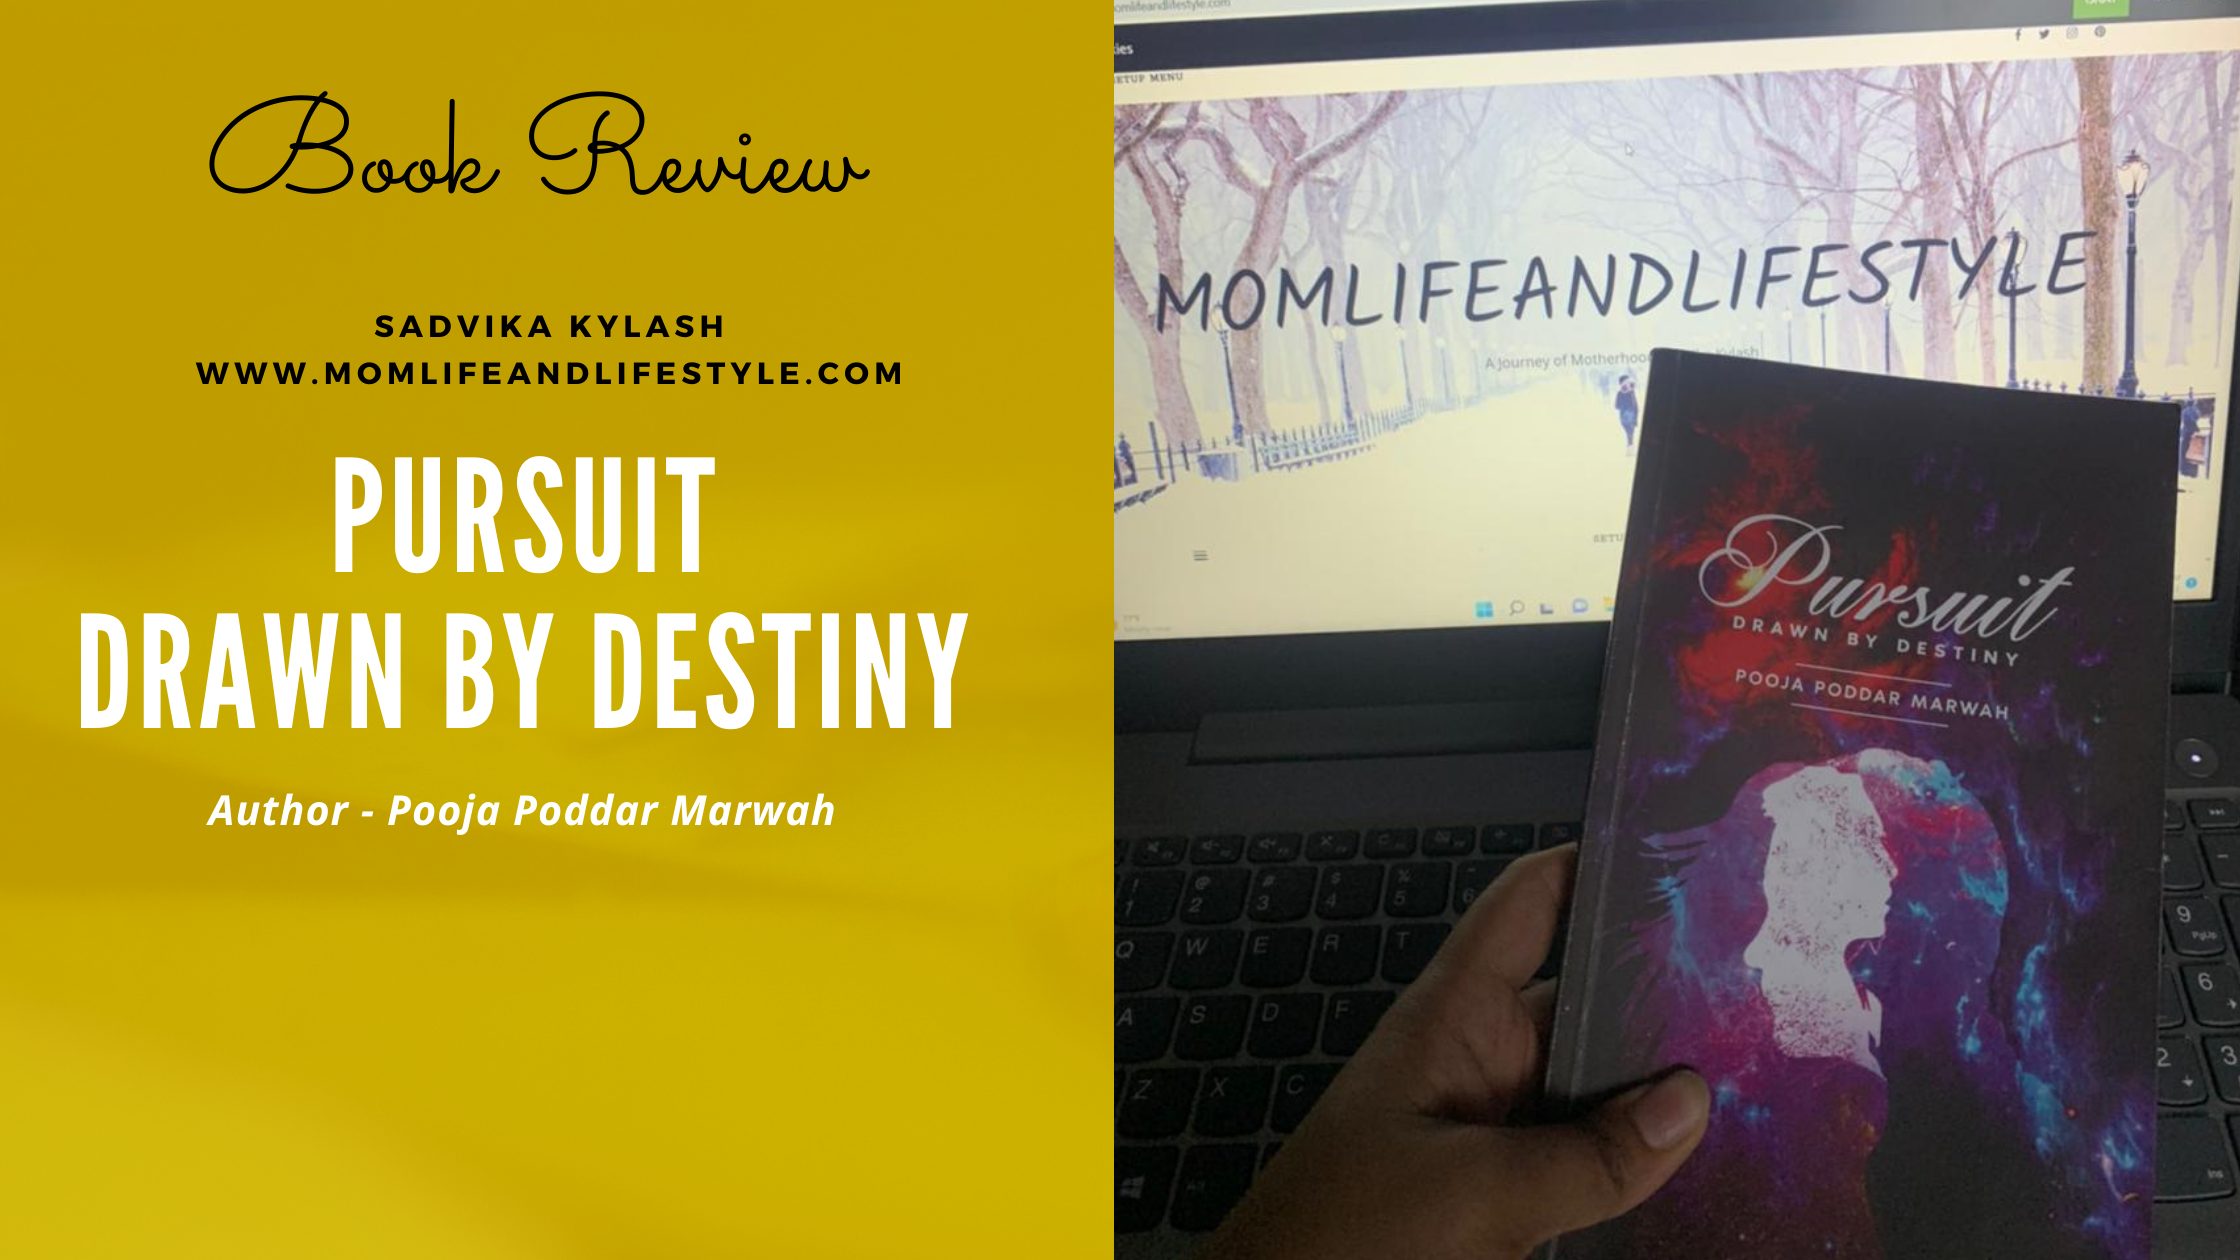 Pursuit Drawn by Destiny. Book review by Sadvika Kylash